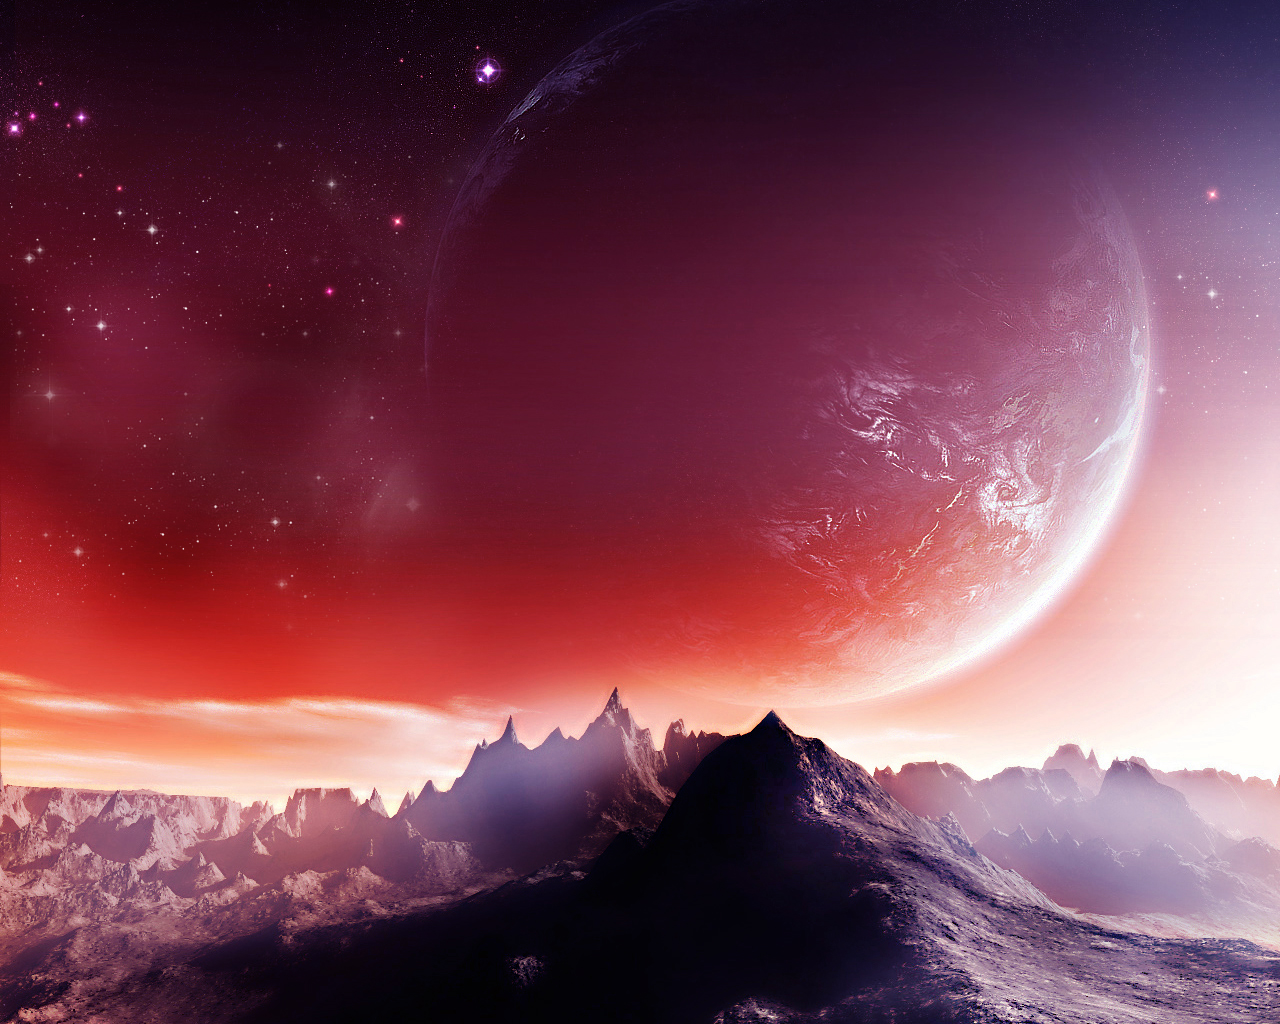 Previous, 3D-graphics - Dark planet wallpaper